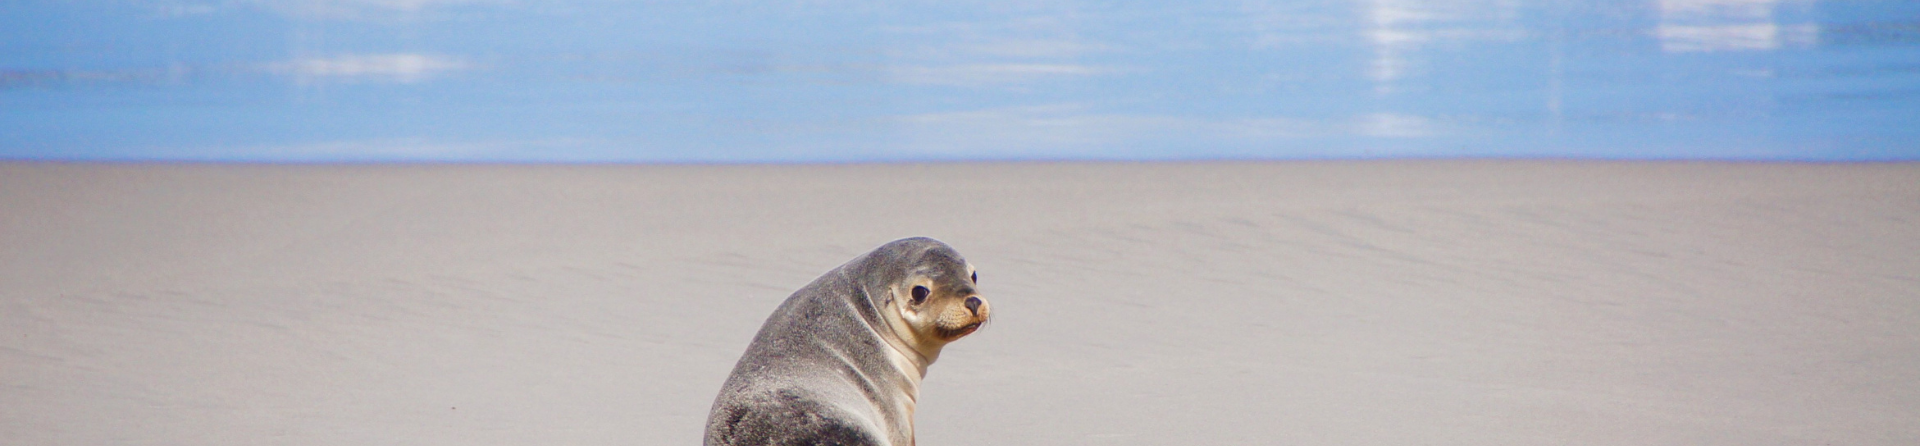 Is Seal Bay worth visiting?